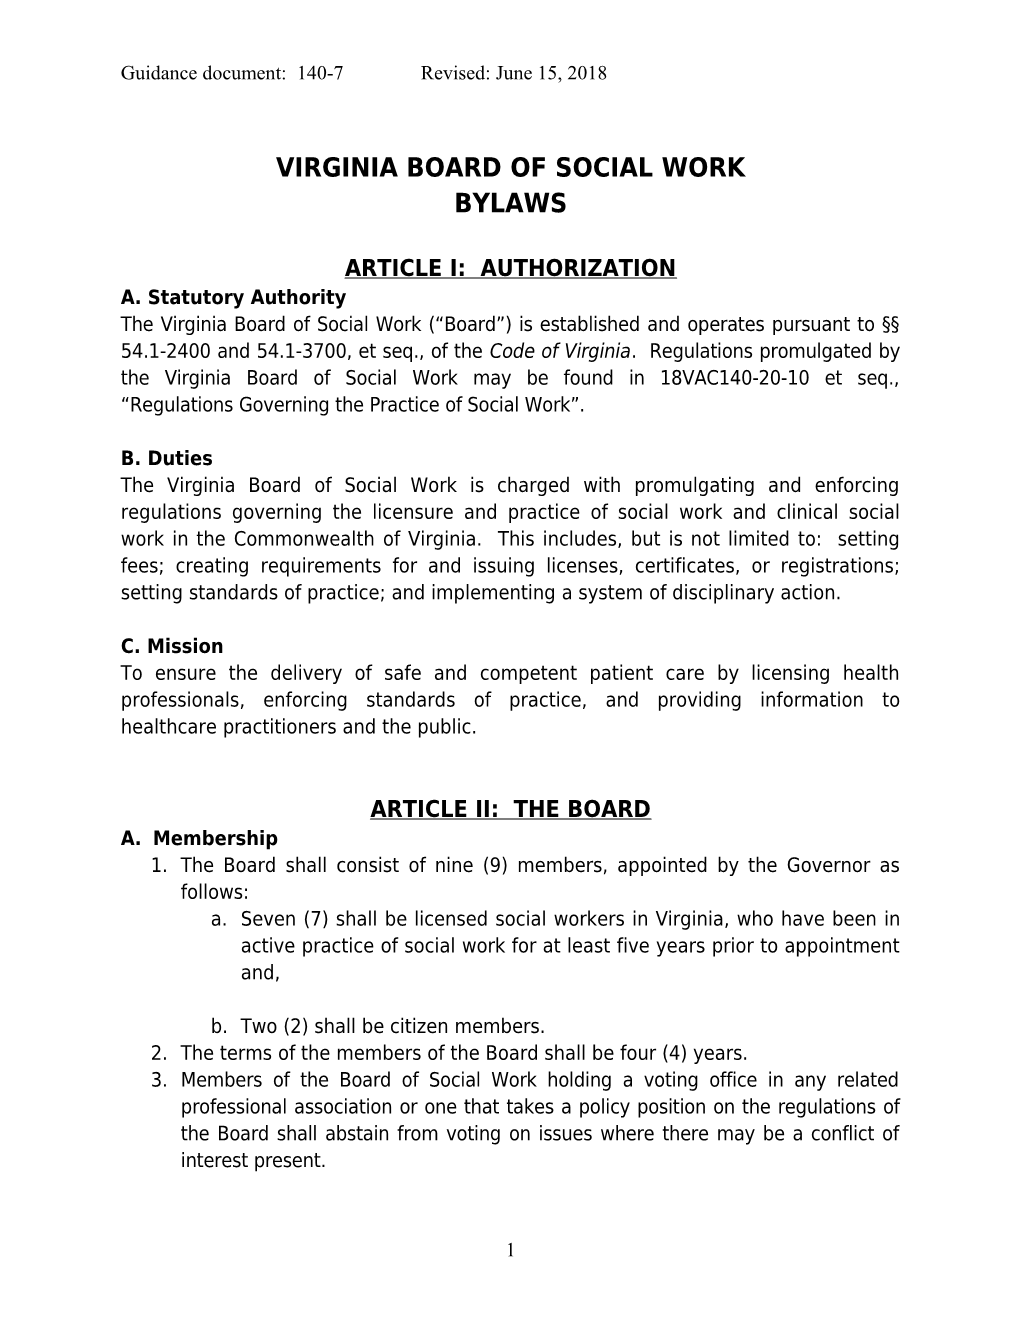 Virginia Board of Social Work